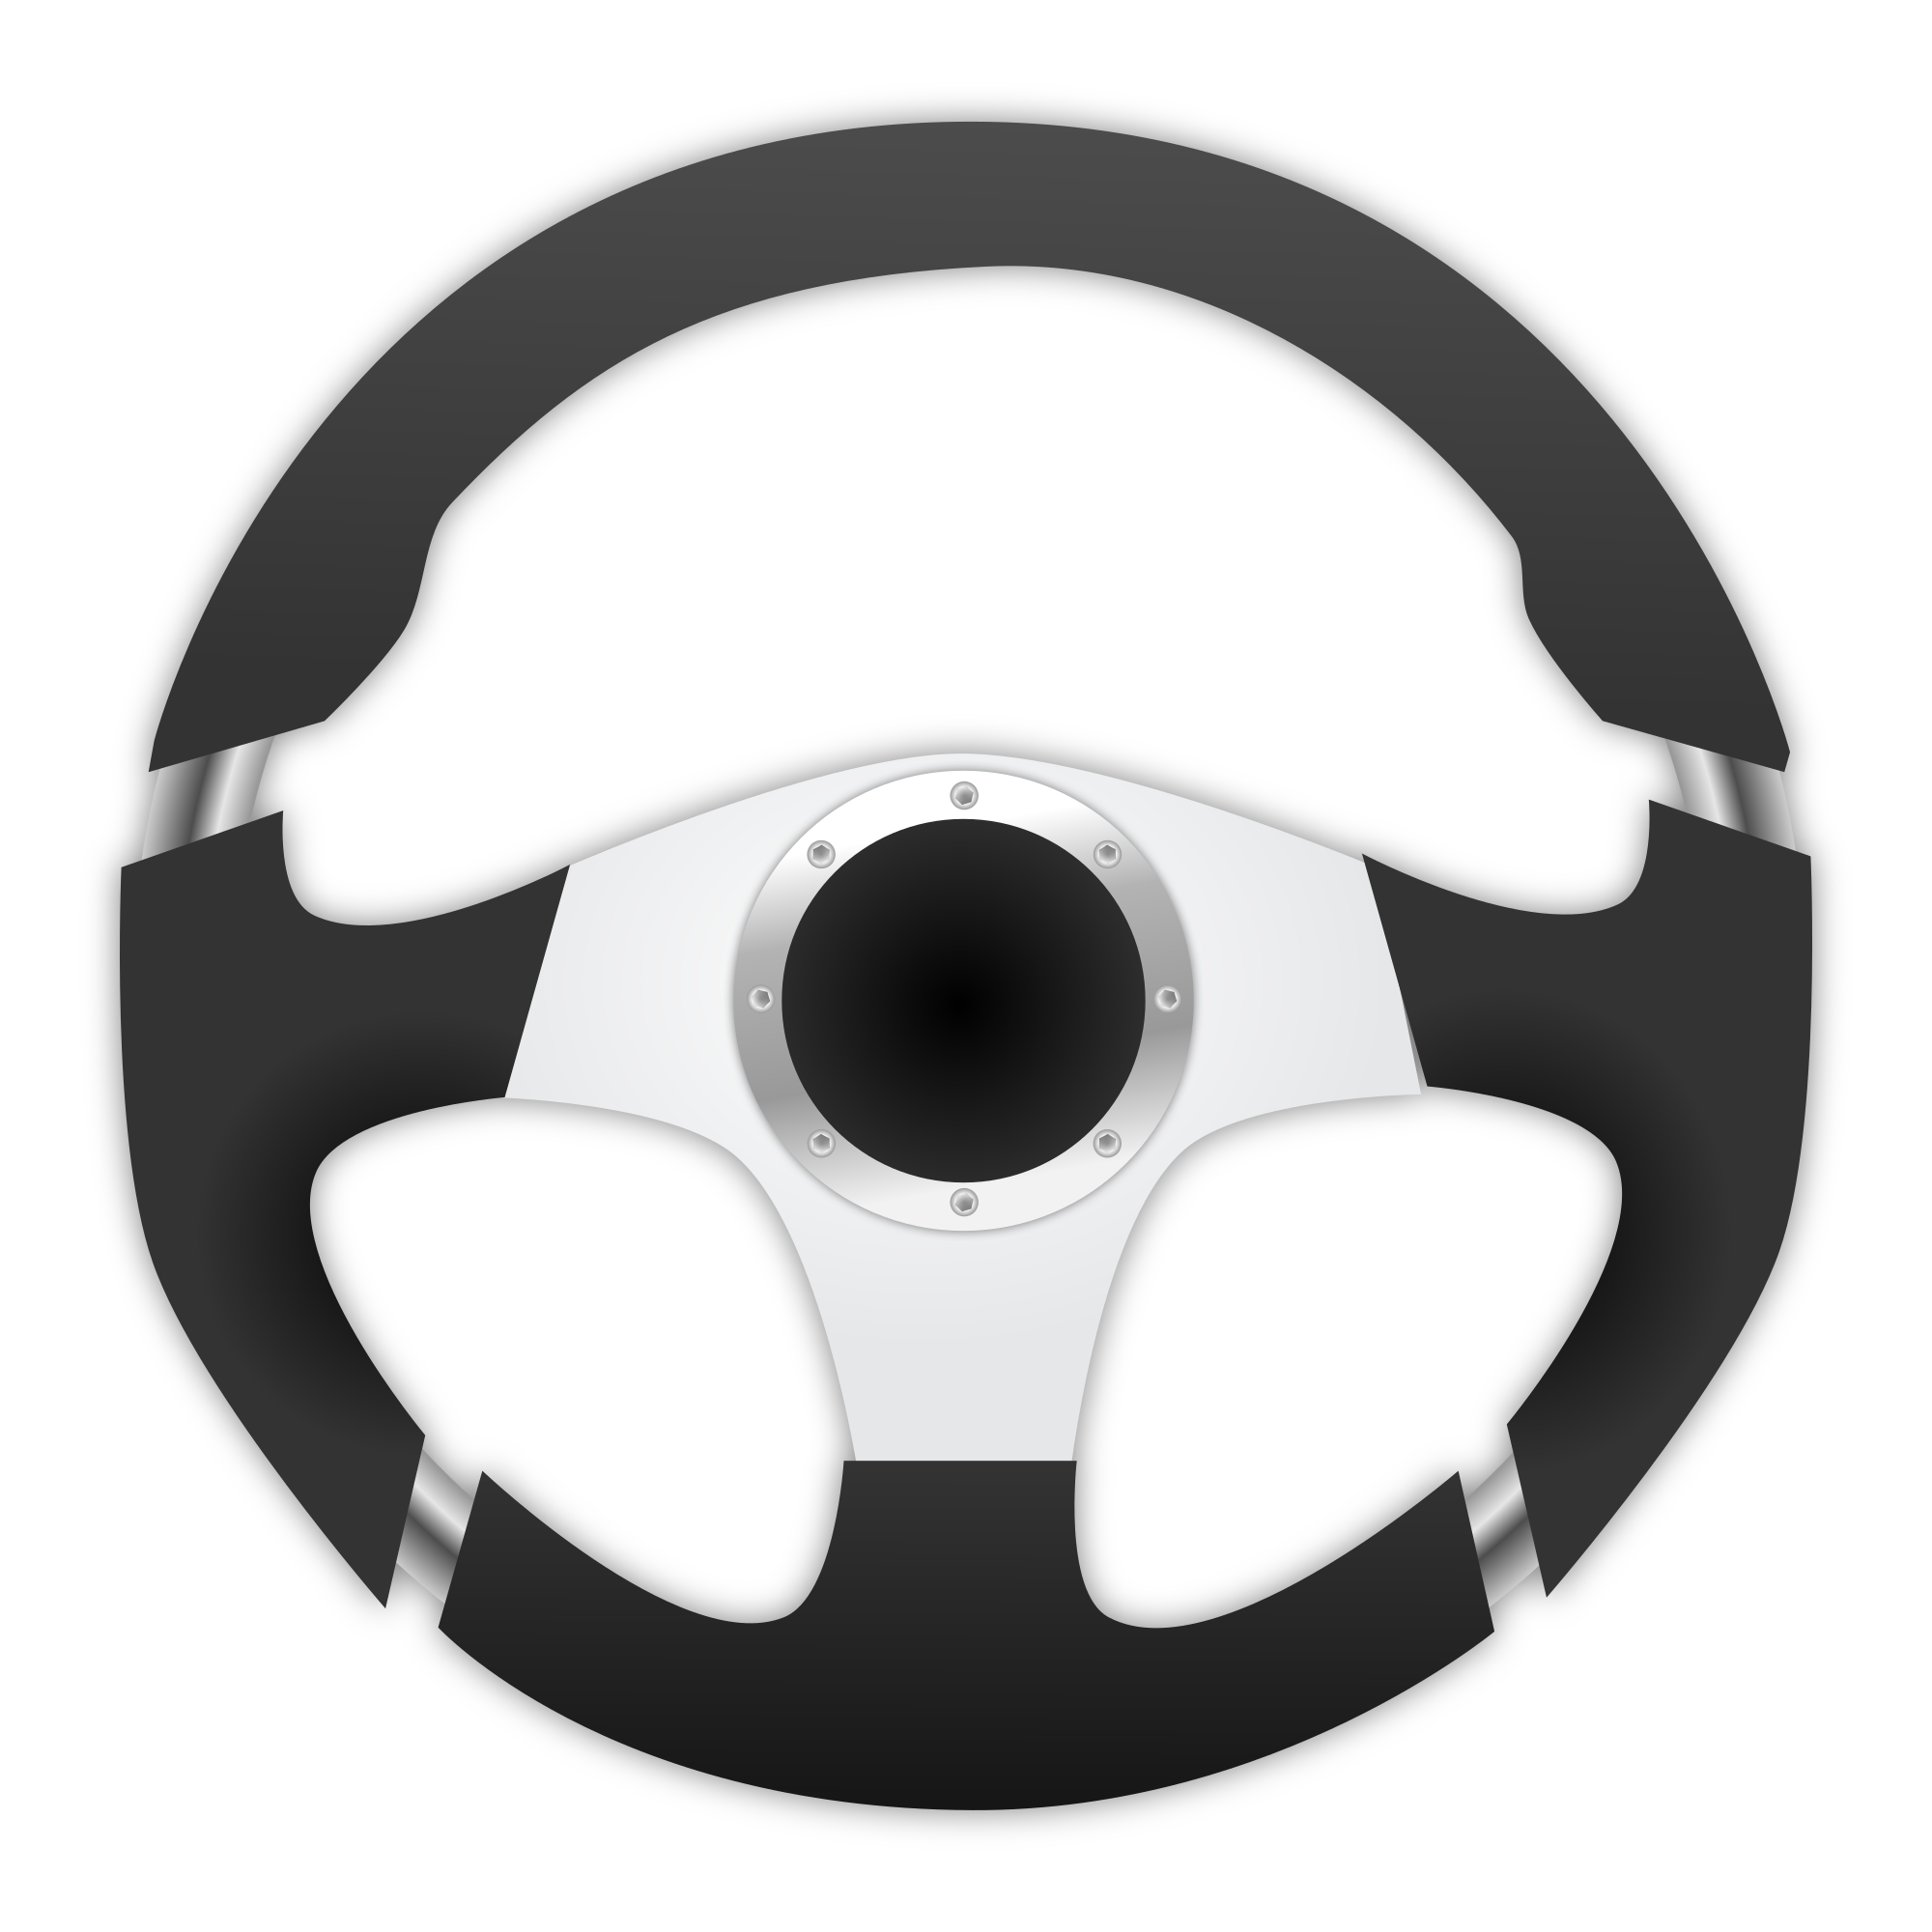 Wheel clipart steering wheel. File svg wikimedia commons